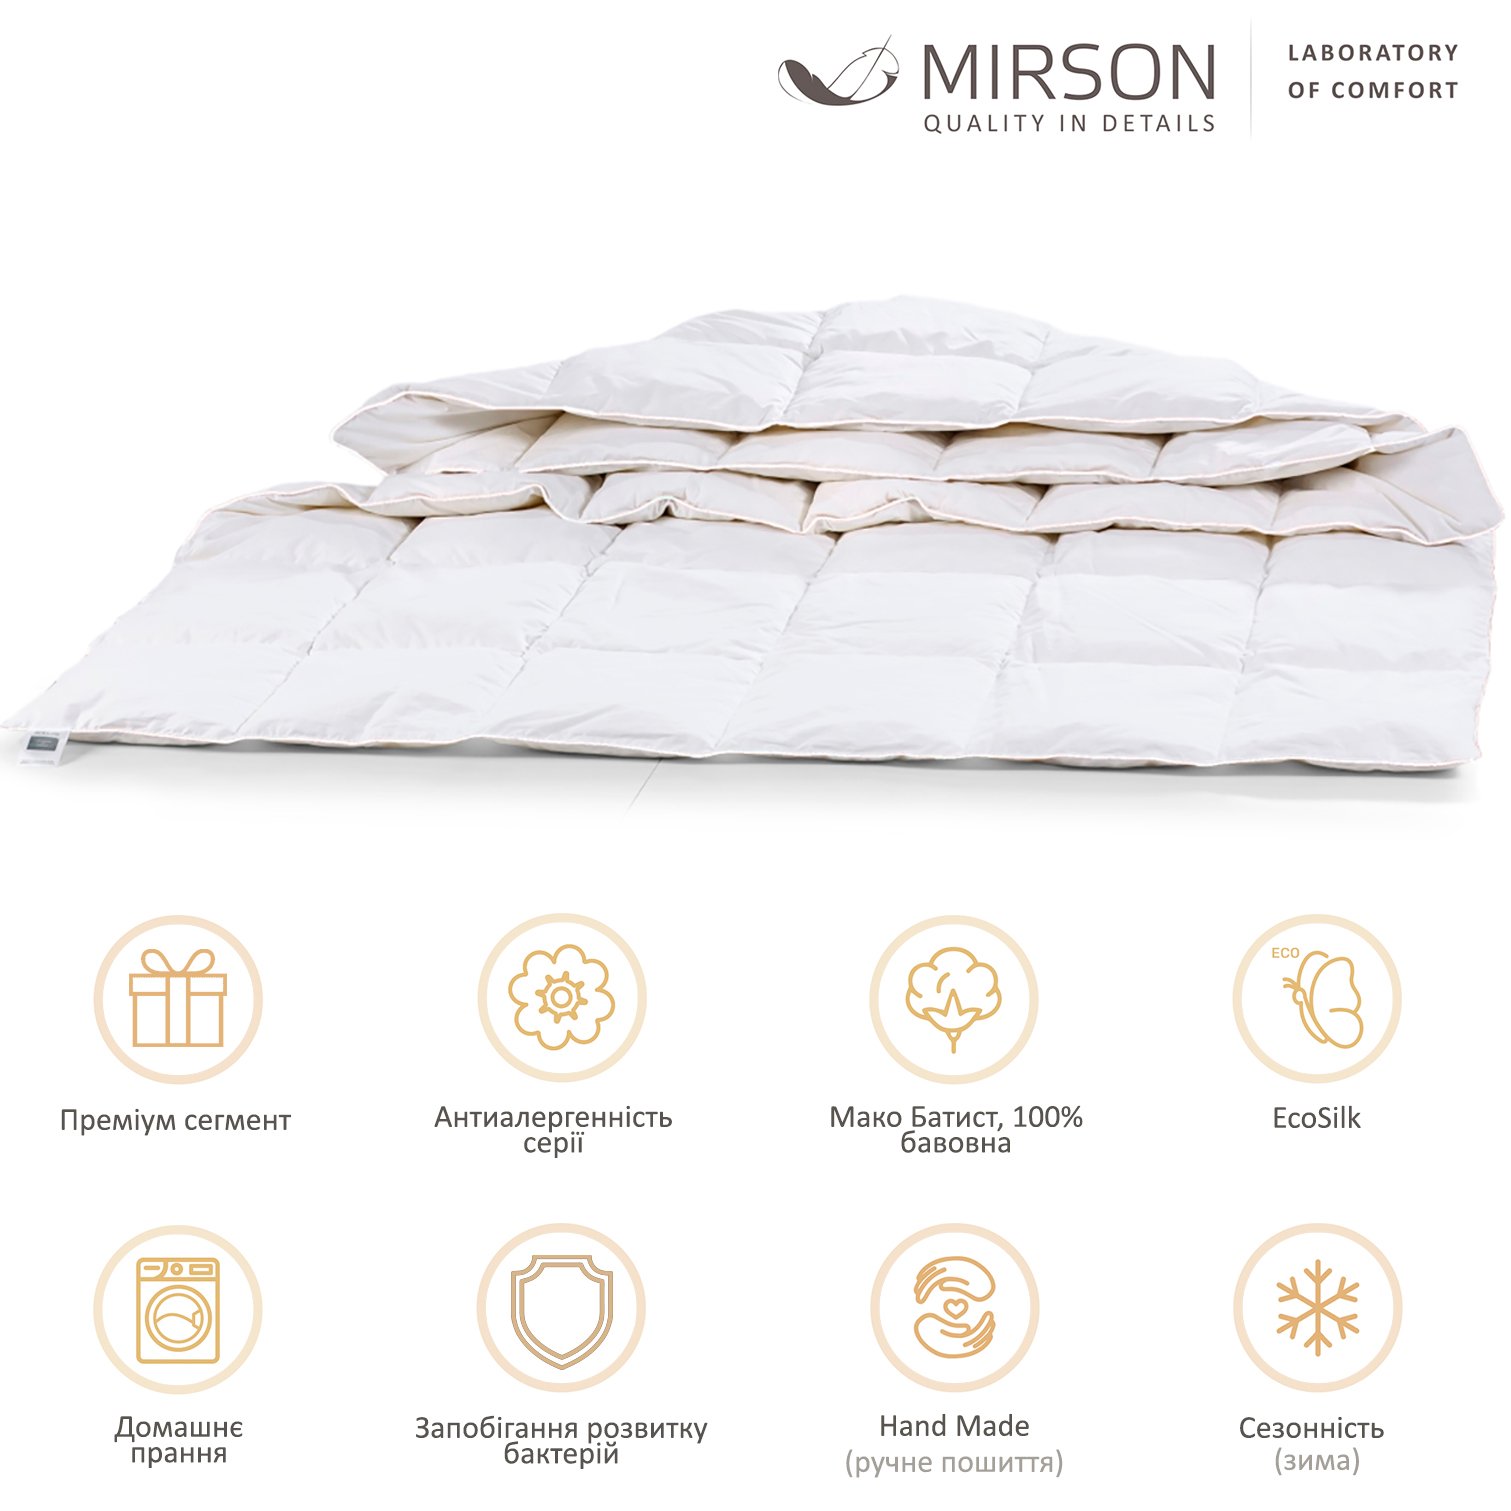 Ковдра антиалергенна MirSon Luxury Exclusive EcoSilk №1317, зимова, 200x220 см, біла (237054457) - фото 5